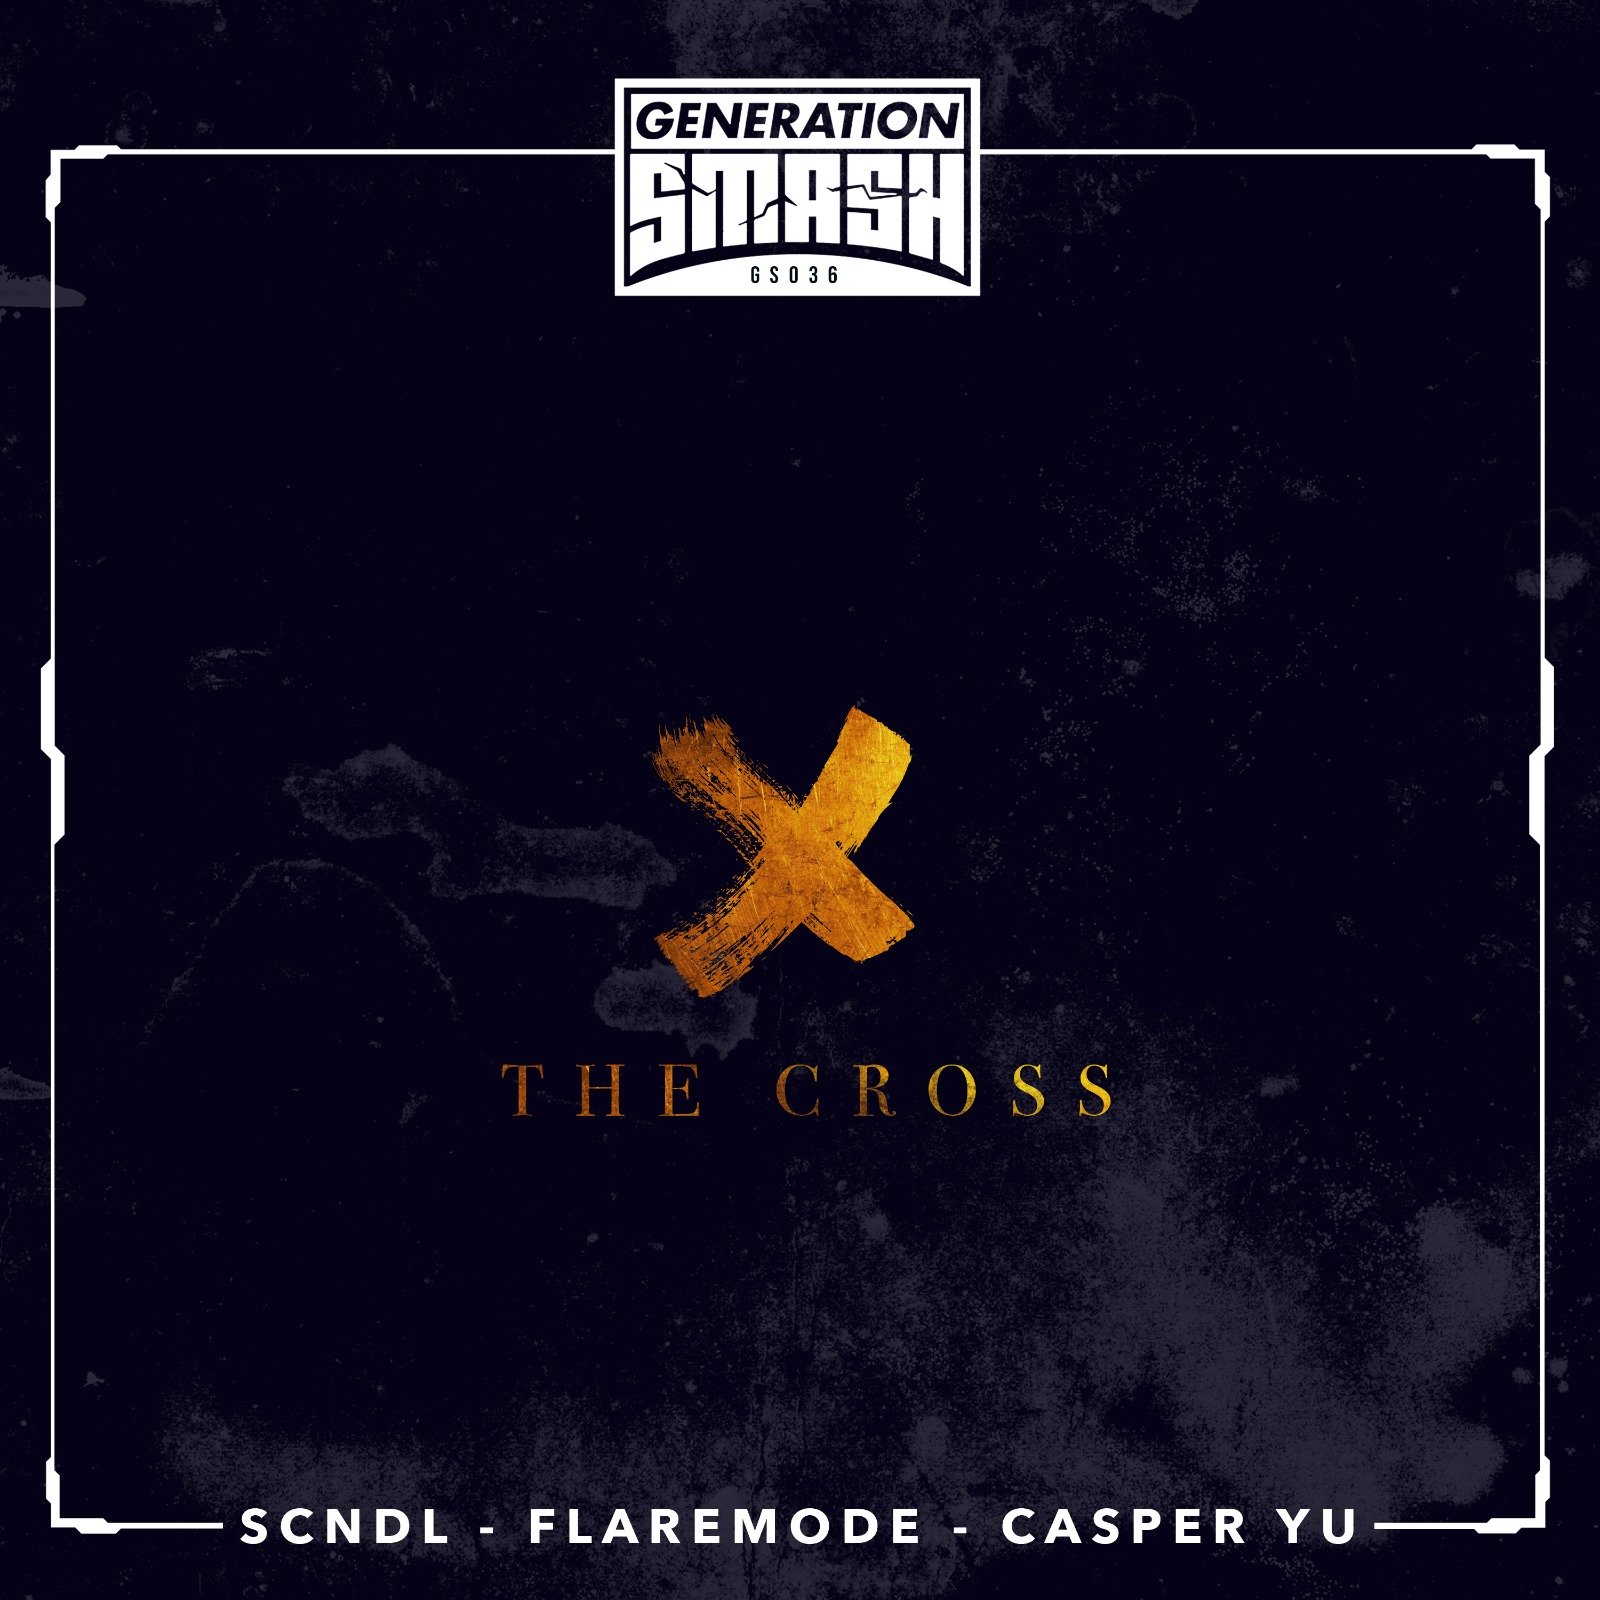 SCNDL, Flaremode, & Casper Yu Team Up For Gigantic Single, "The Cross" [Generation Smash] | Your EDM